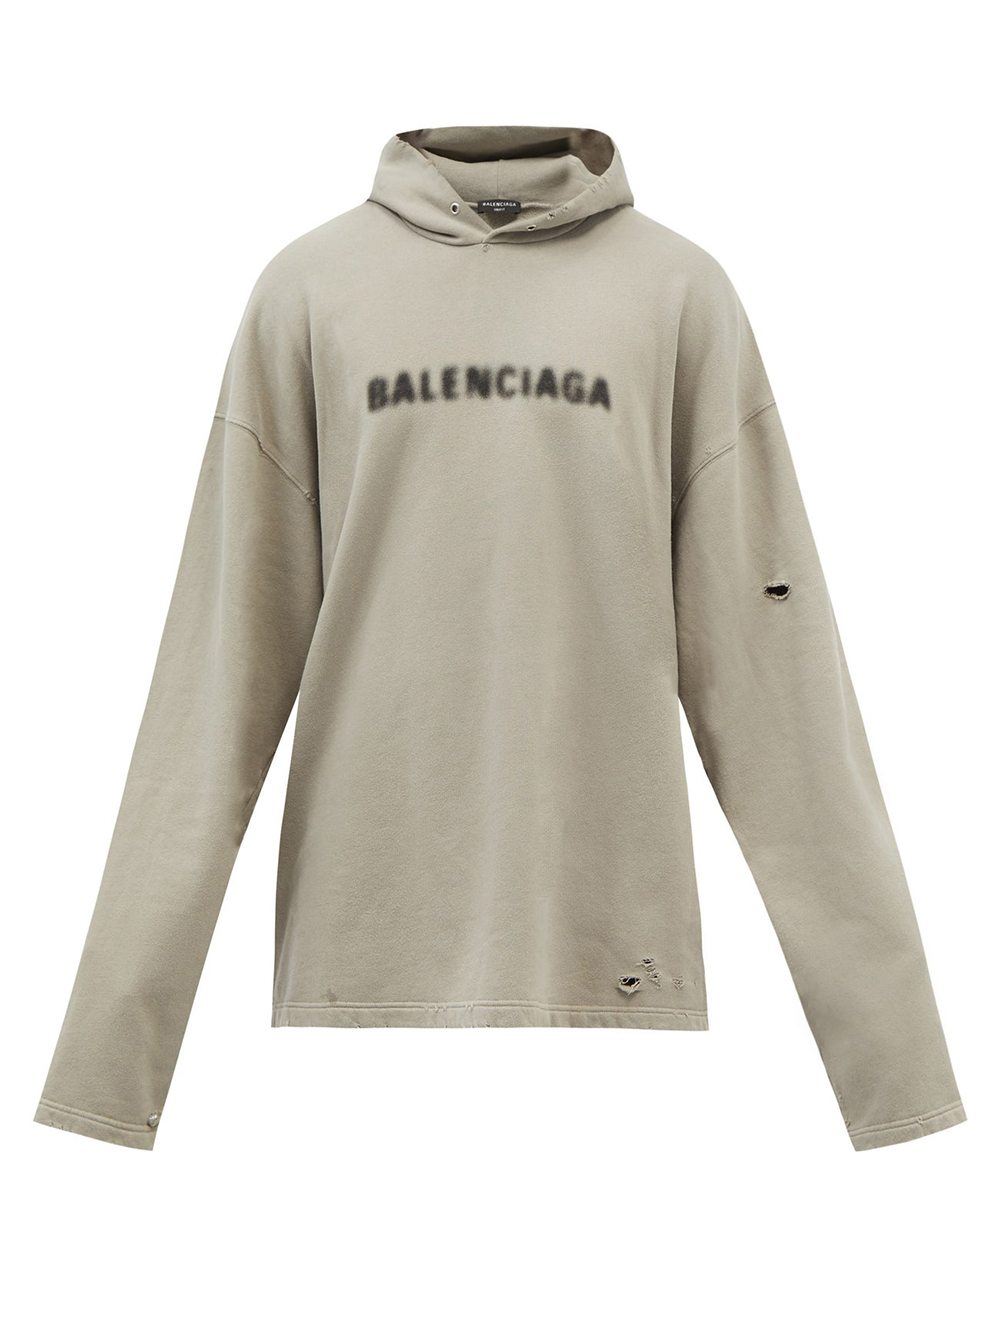 950Auth Balenciaga Light Grey Cotton Hoodie Oversized Sweatshirt  DressMLXL  eBay